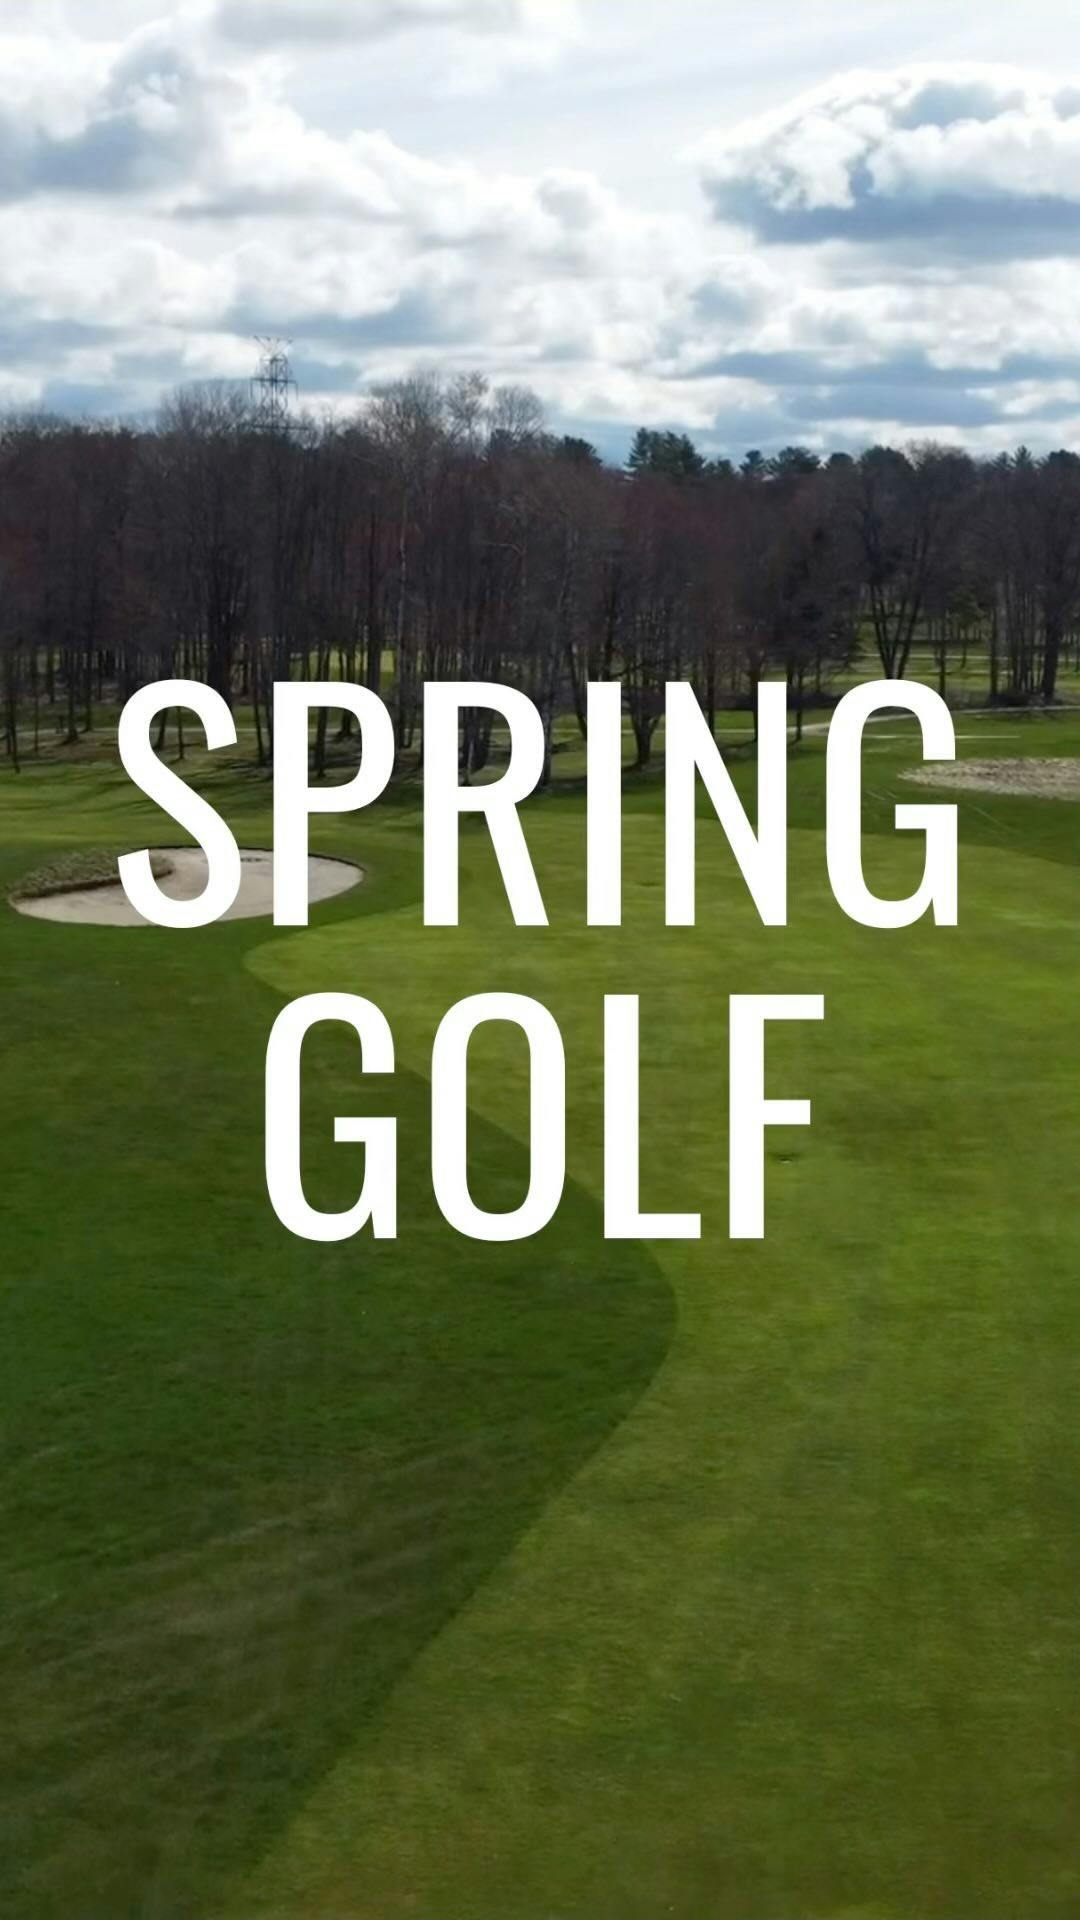 Spring golf starts tomorrow 🔥🔥🔥